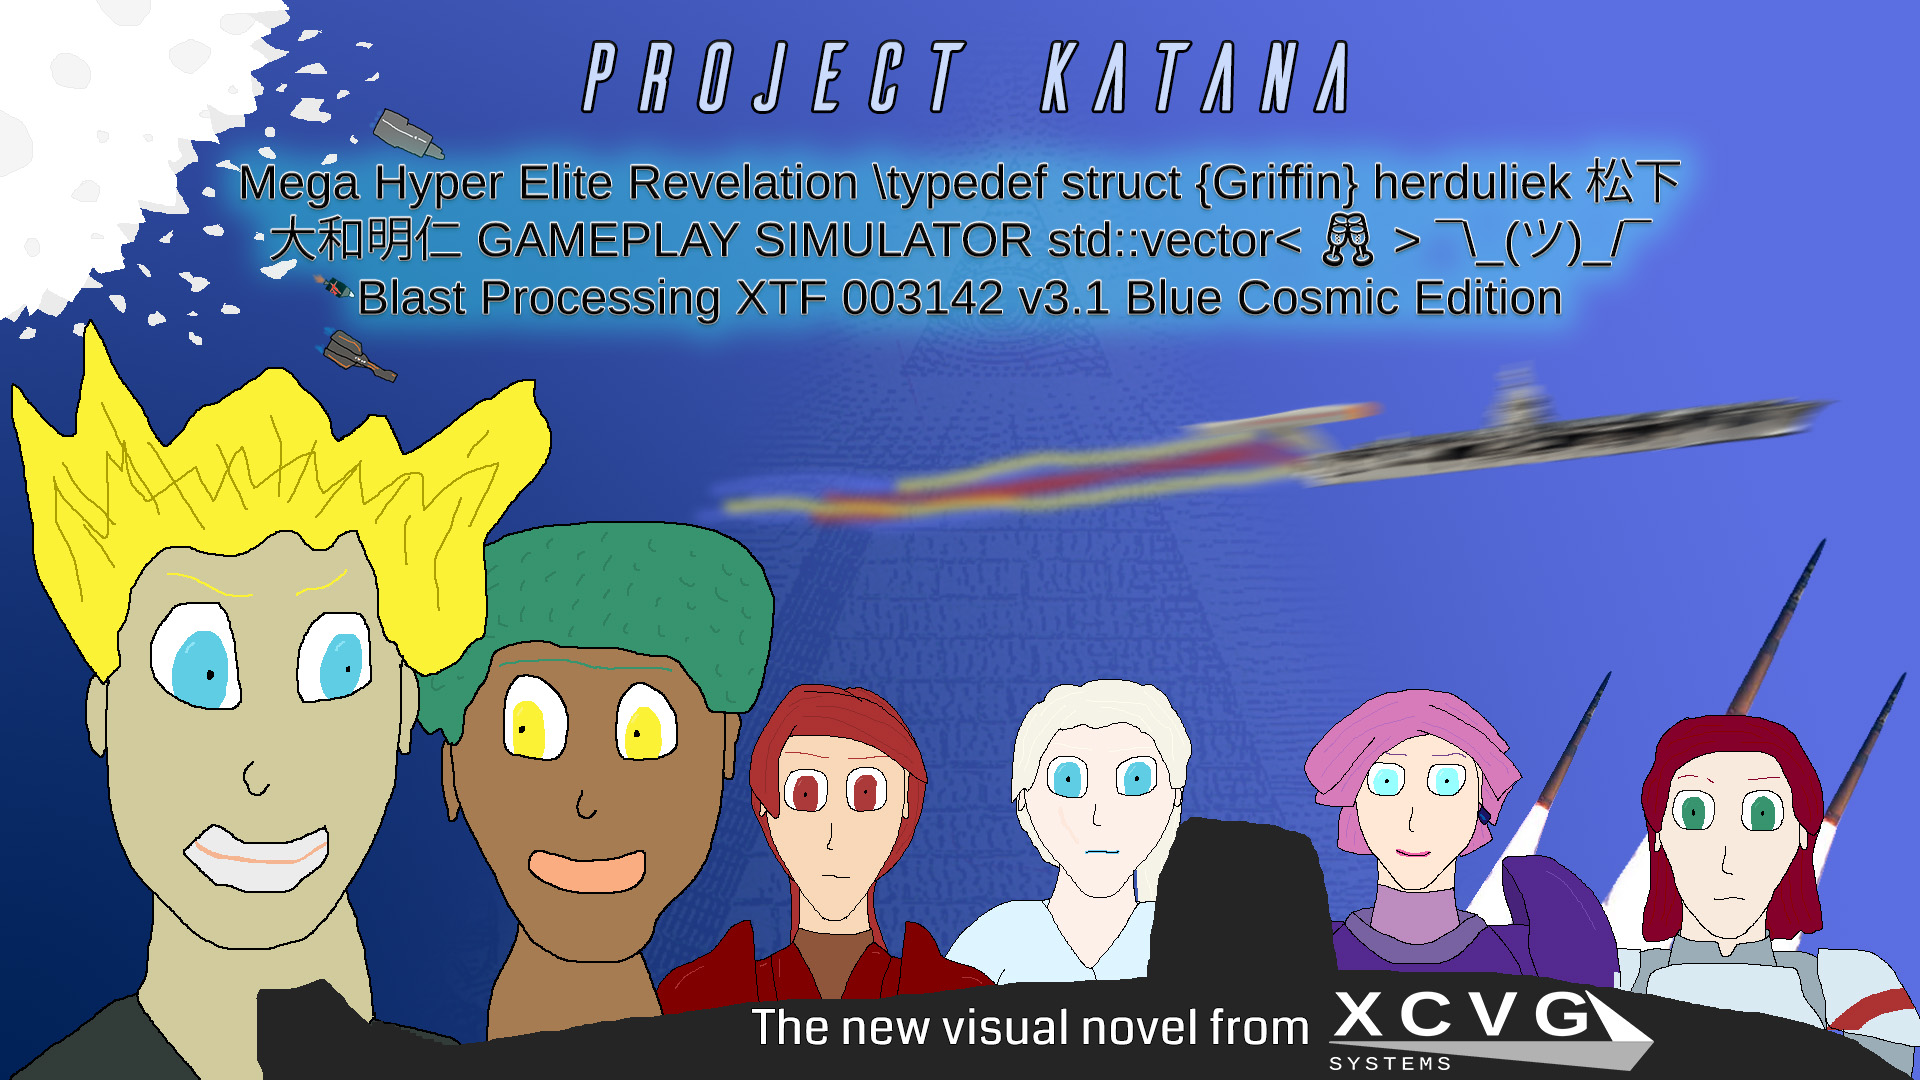 Announcing Project Katana Xcvg Systems